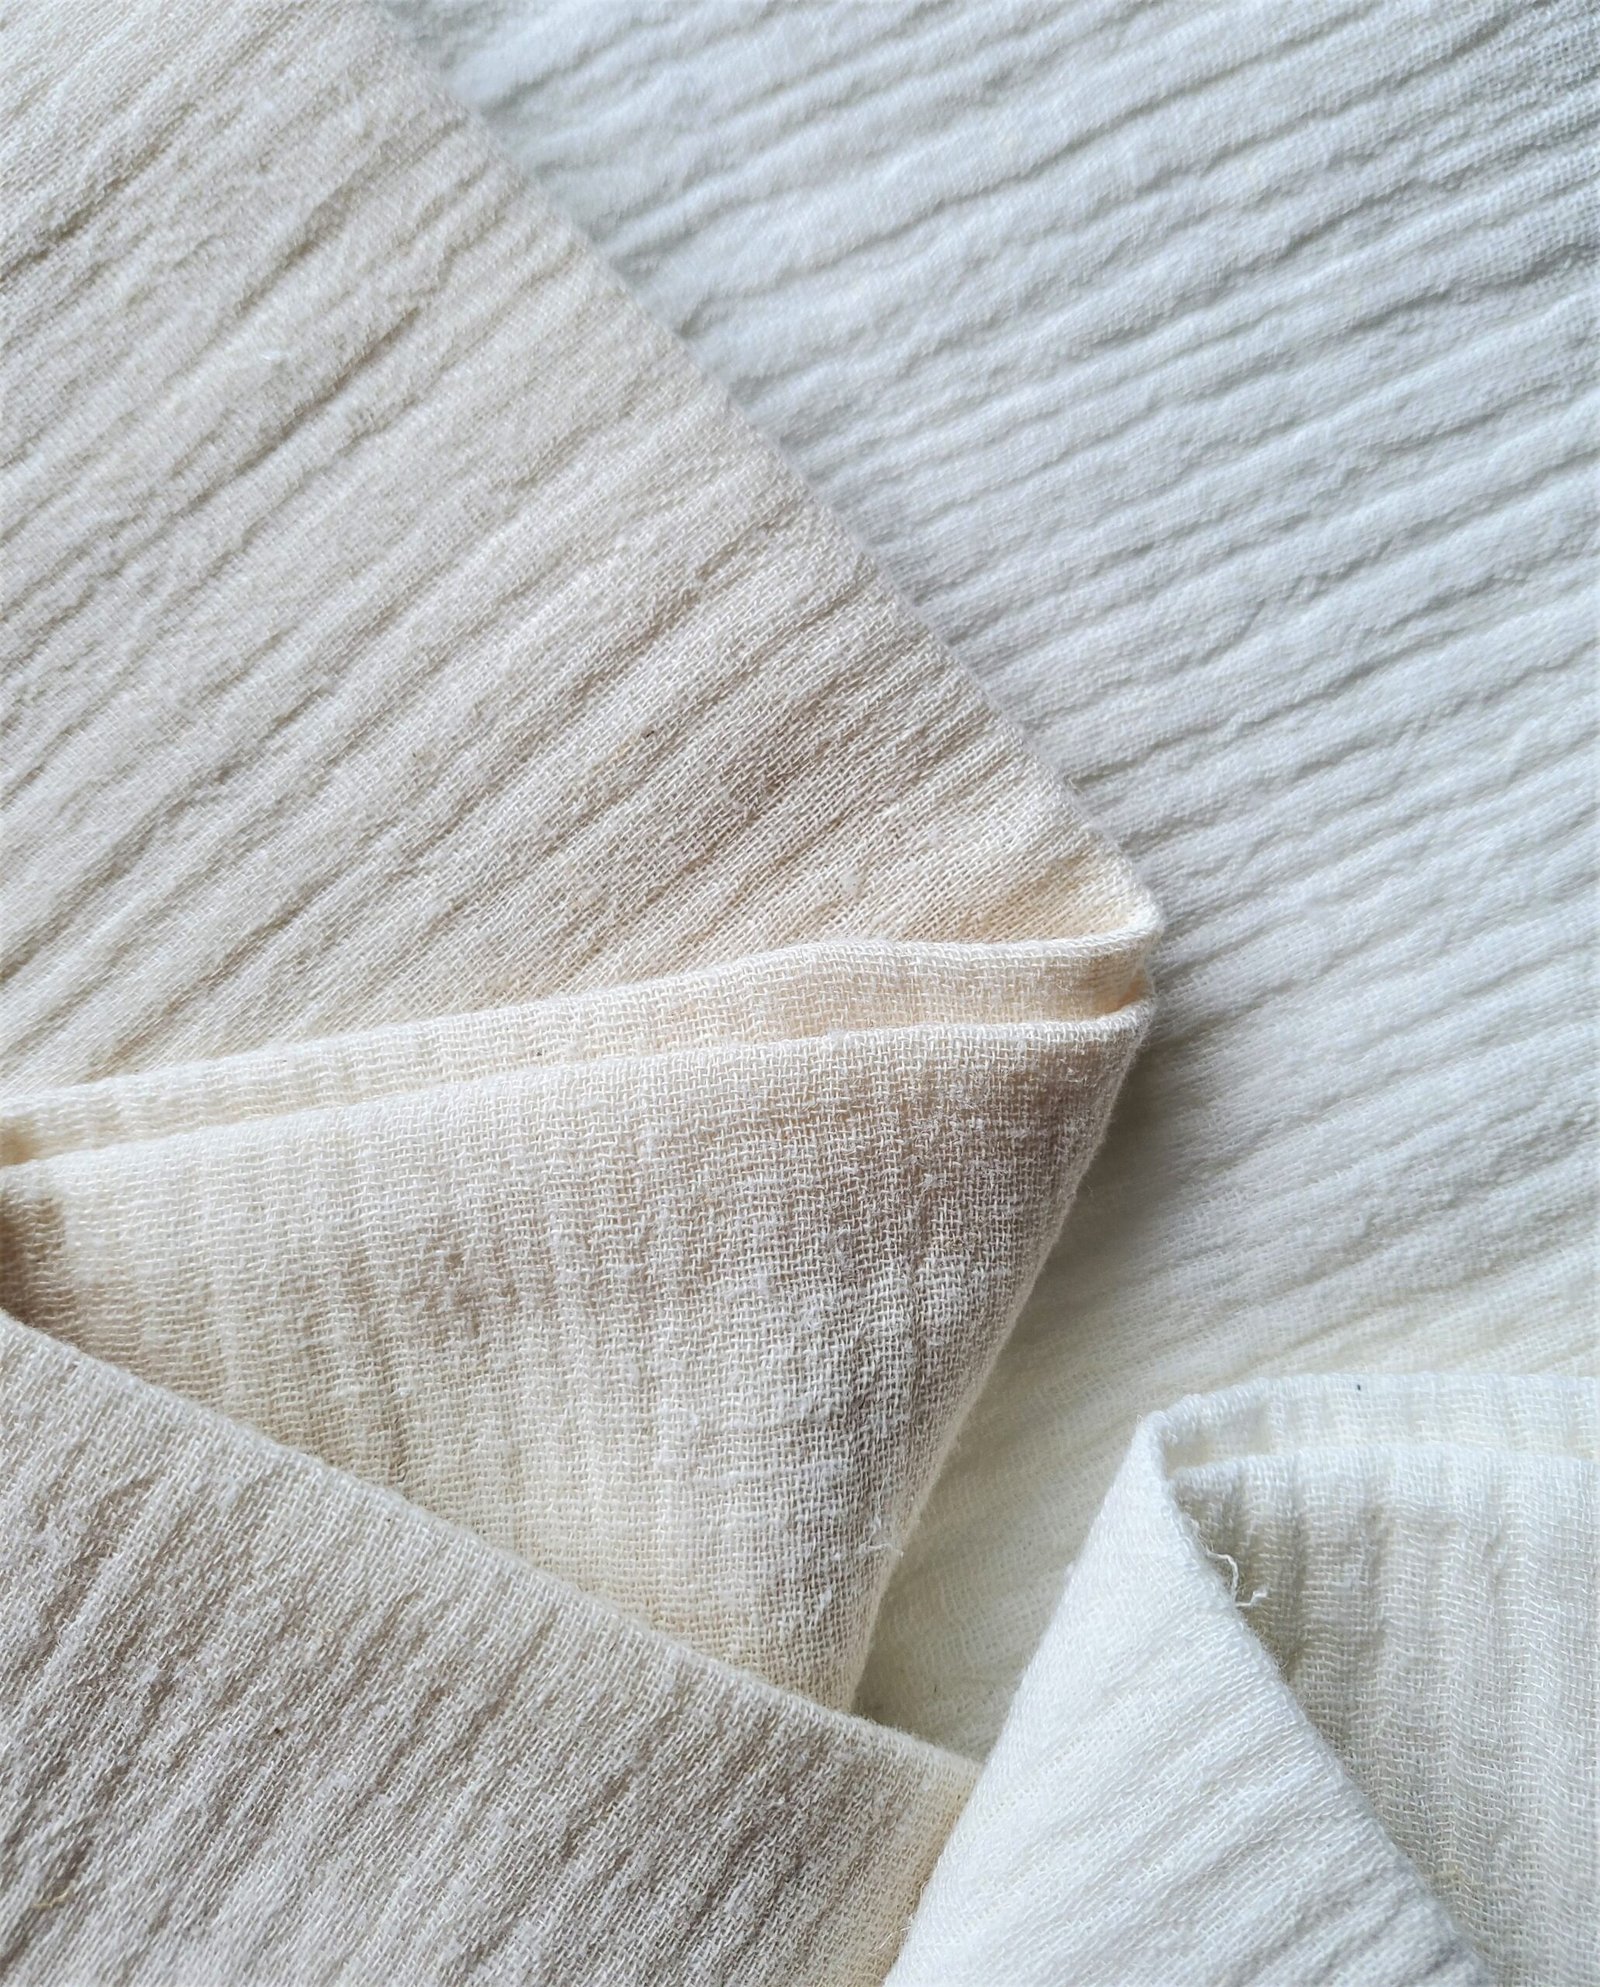 https://silkyjaya.com/wp-content/uploads/2021/02/Hemp-cotton-double-gauze-RFD-white-3-scaled.jpg